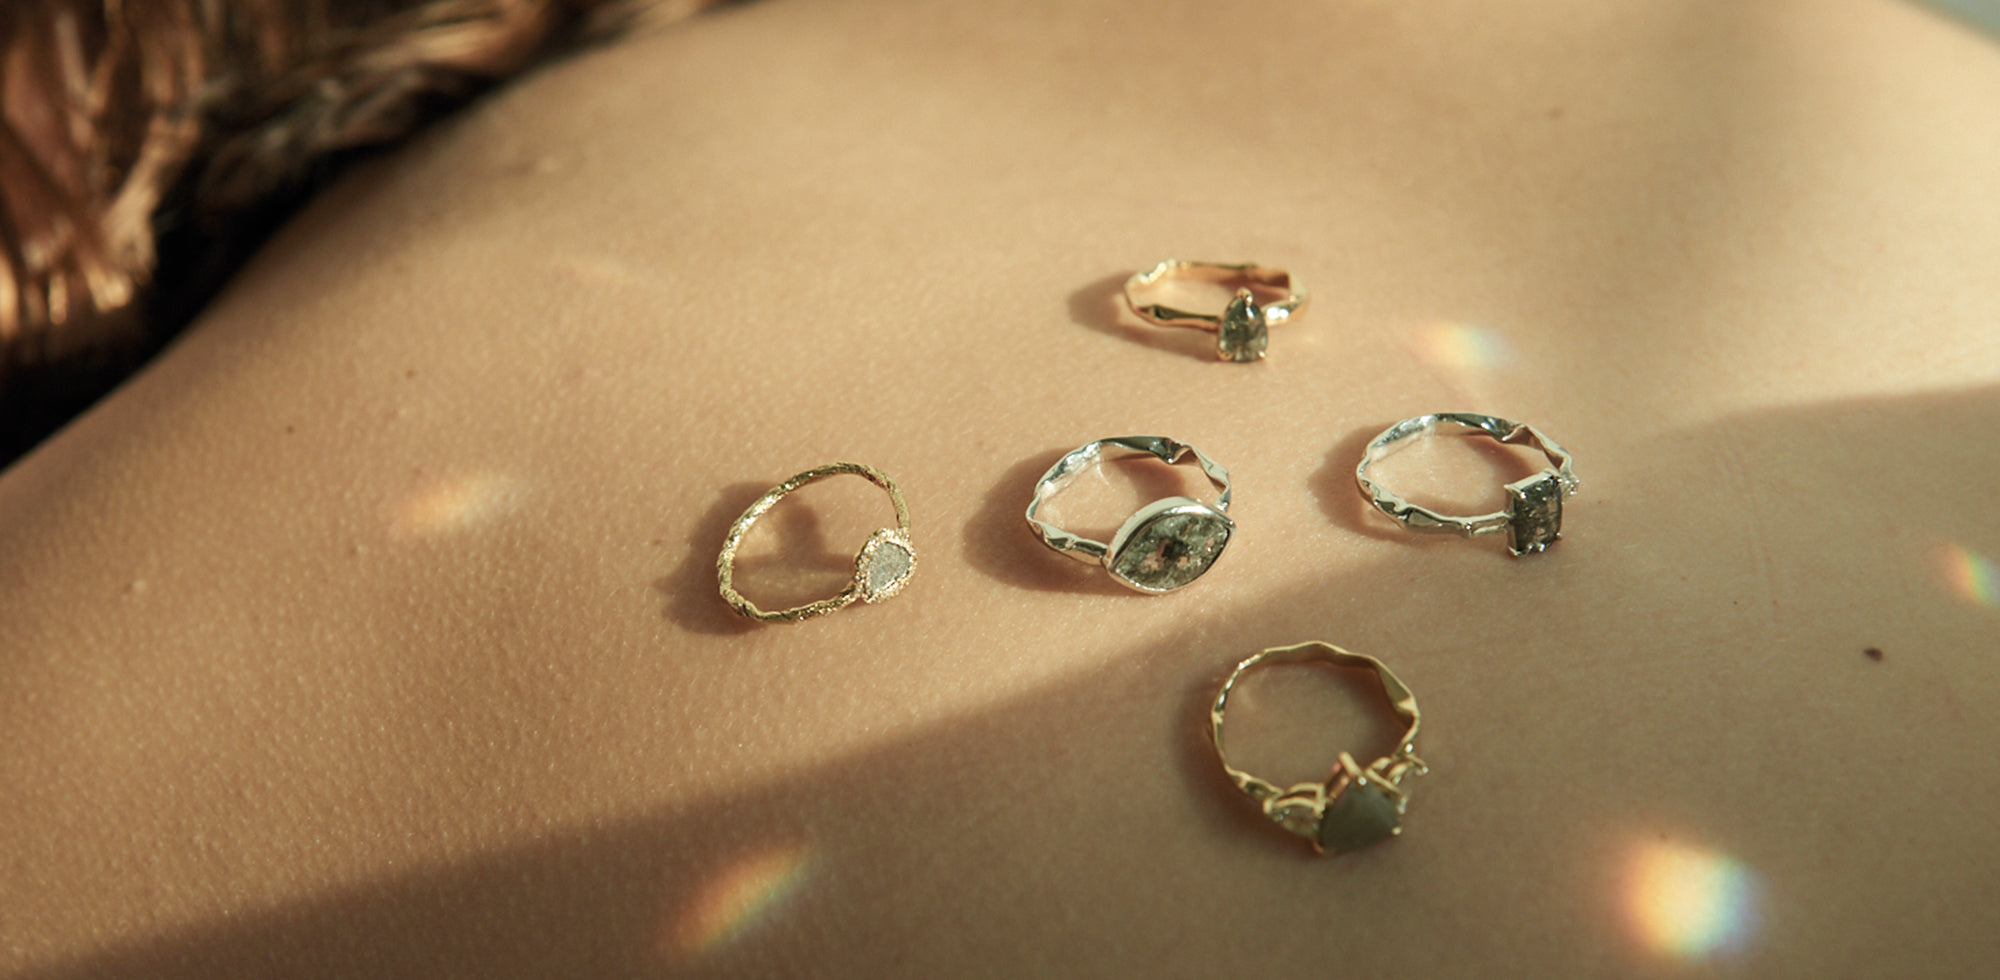 Five bespoke handmade engagement rings against a sandy backdrop